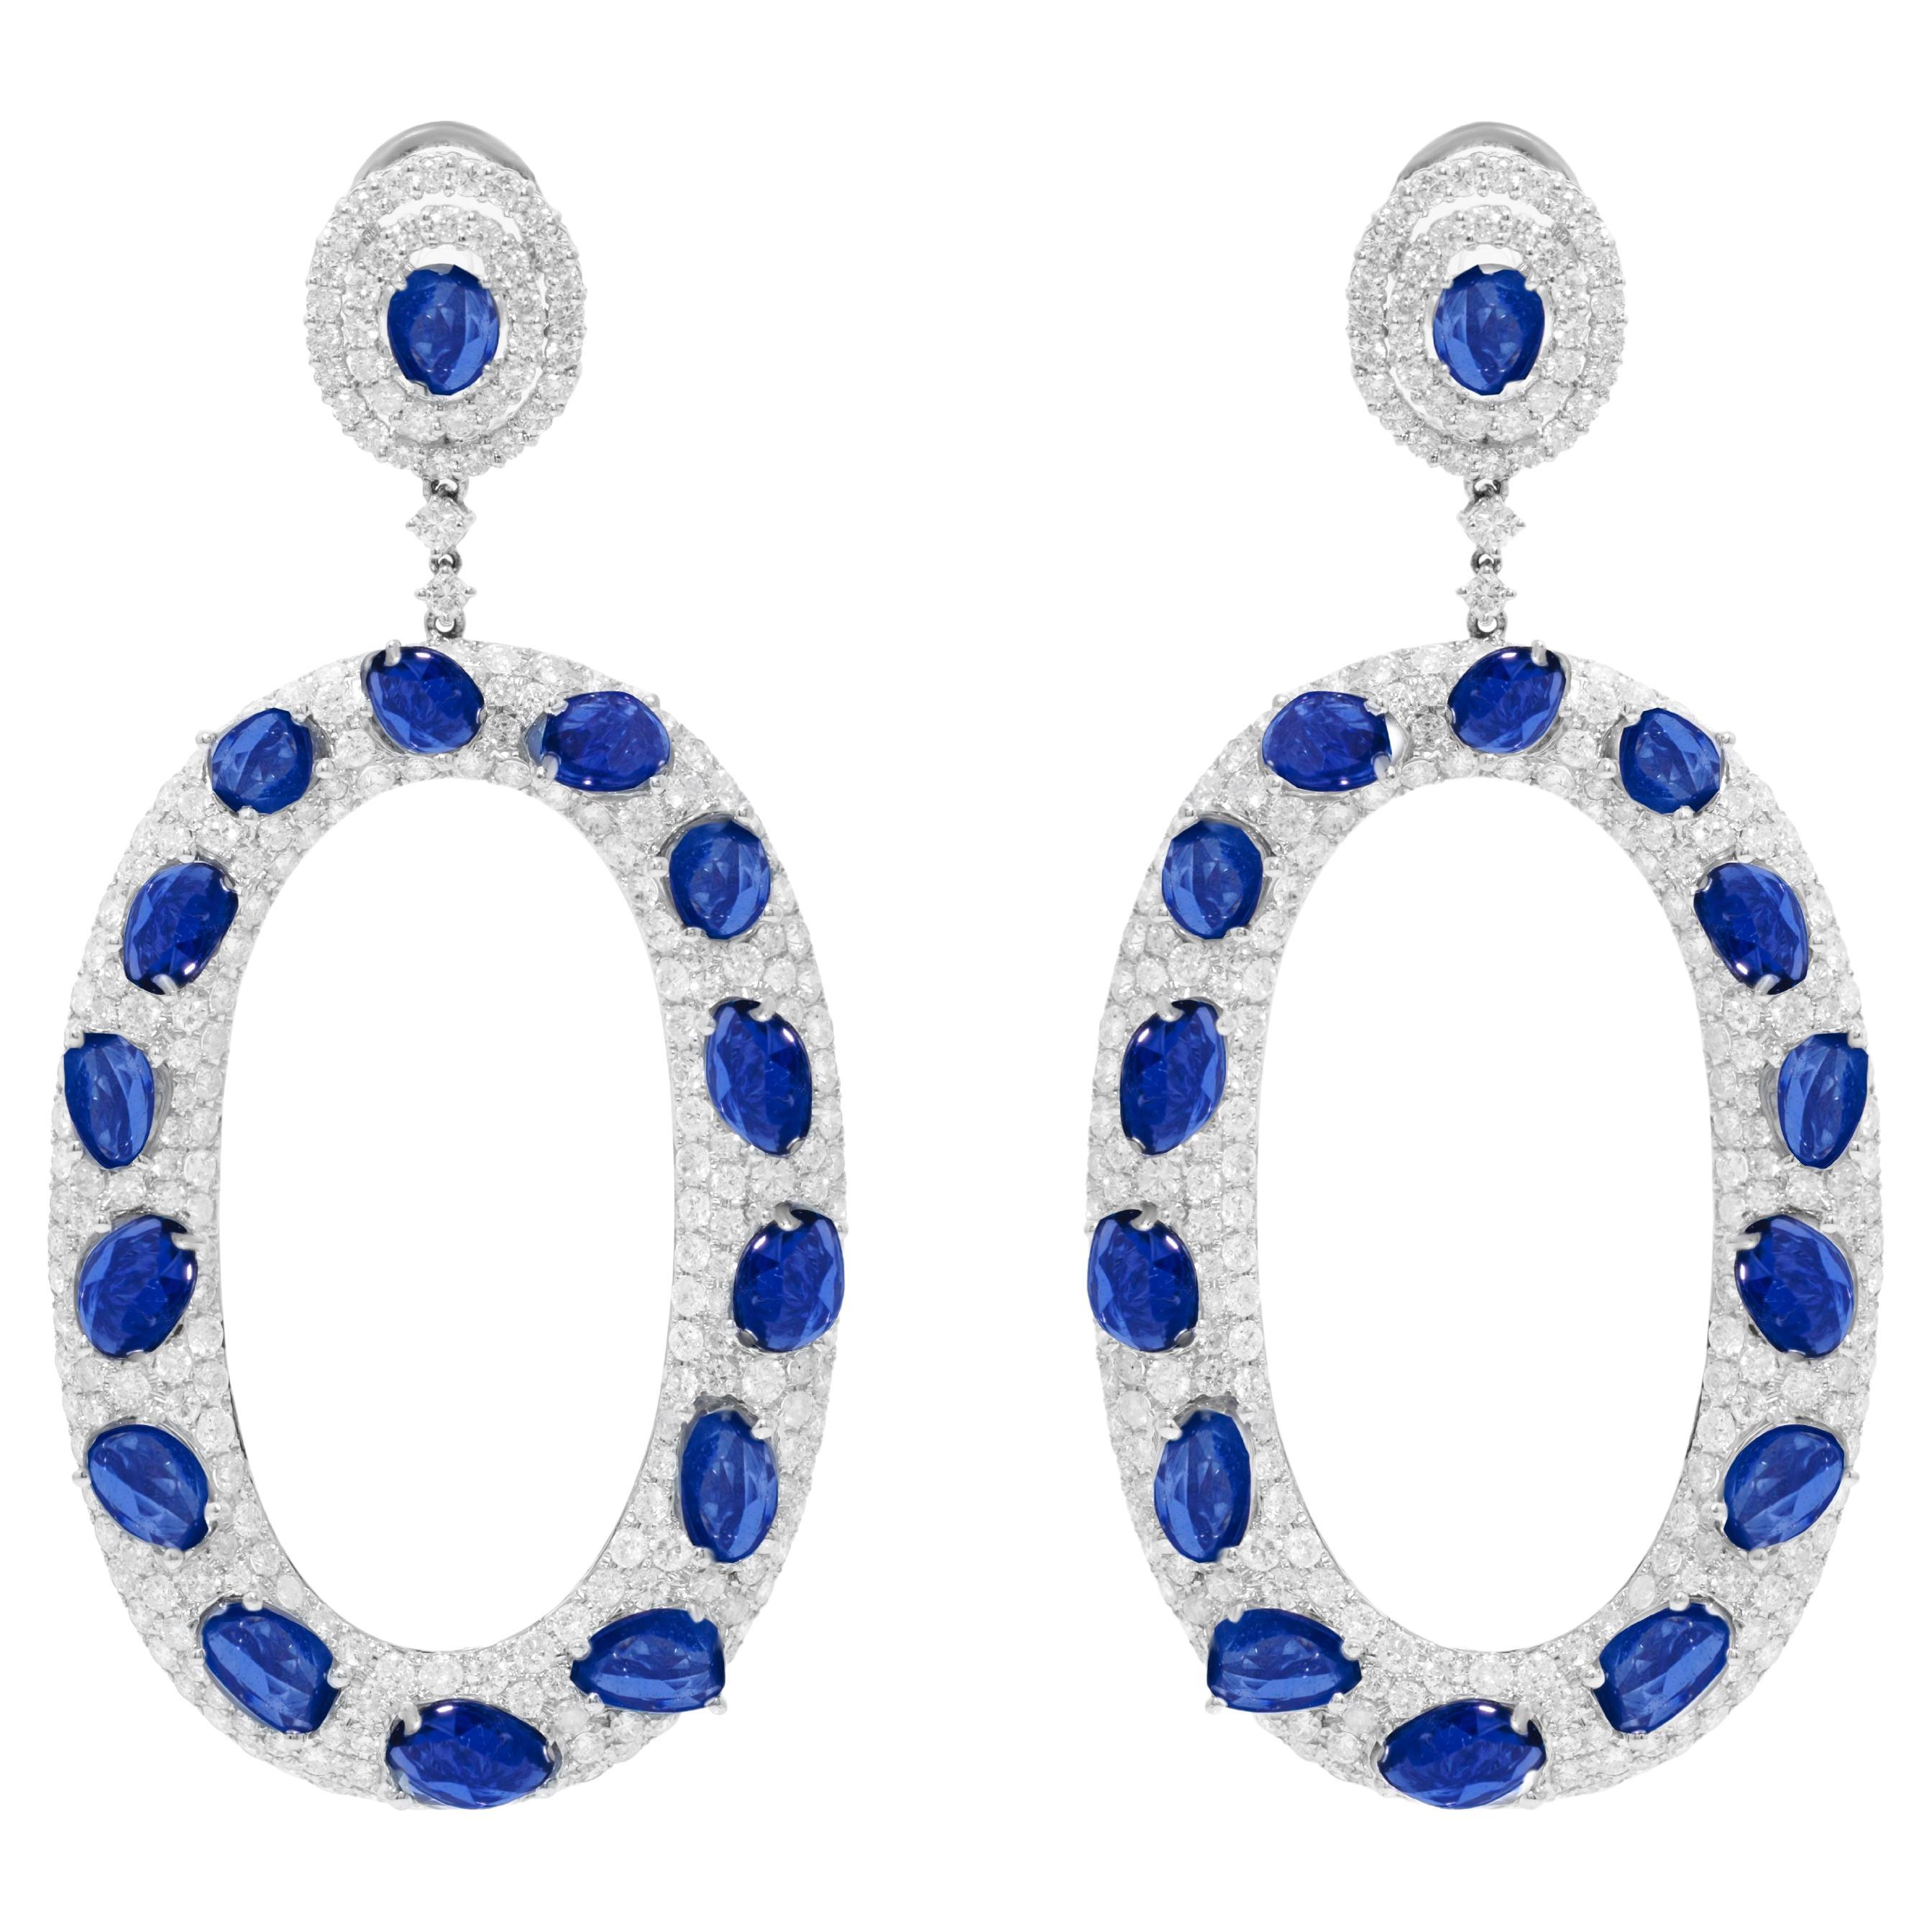 Diana M. 20.14 Carat Sapphire and Diamond Bagel Fashion Earrings 